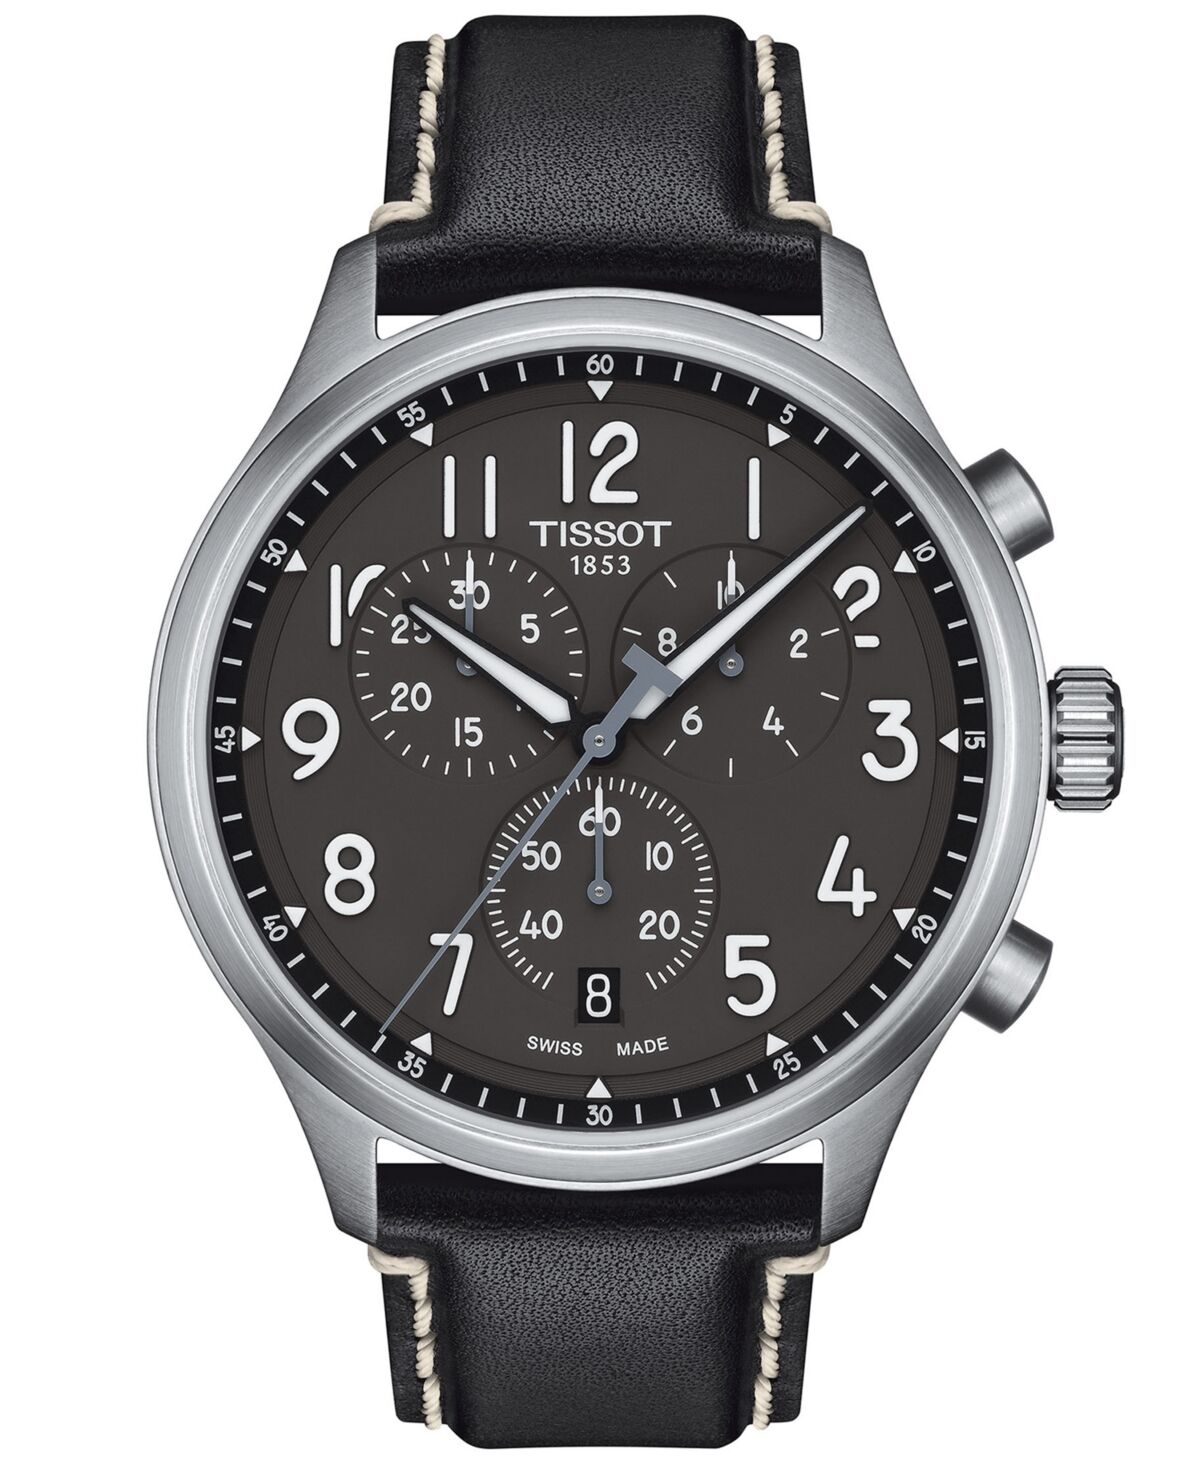 Tissot Men's Swiss Chronograph Xl Anthracite Leather Strap Watch 45mm - Black